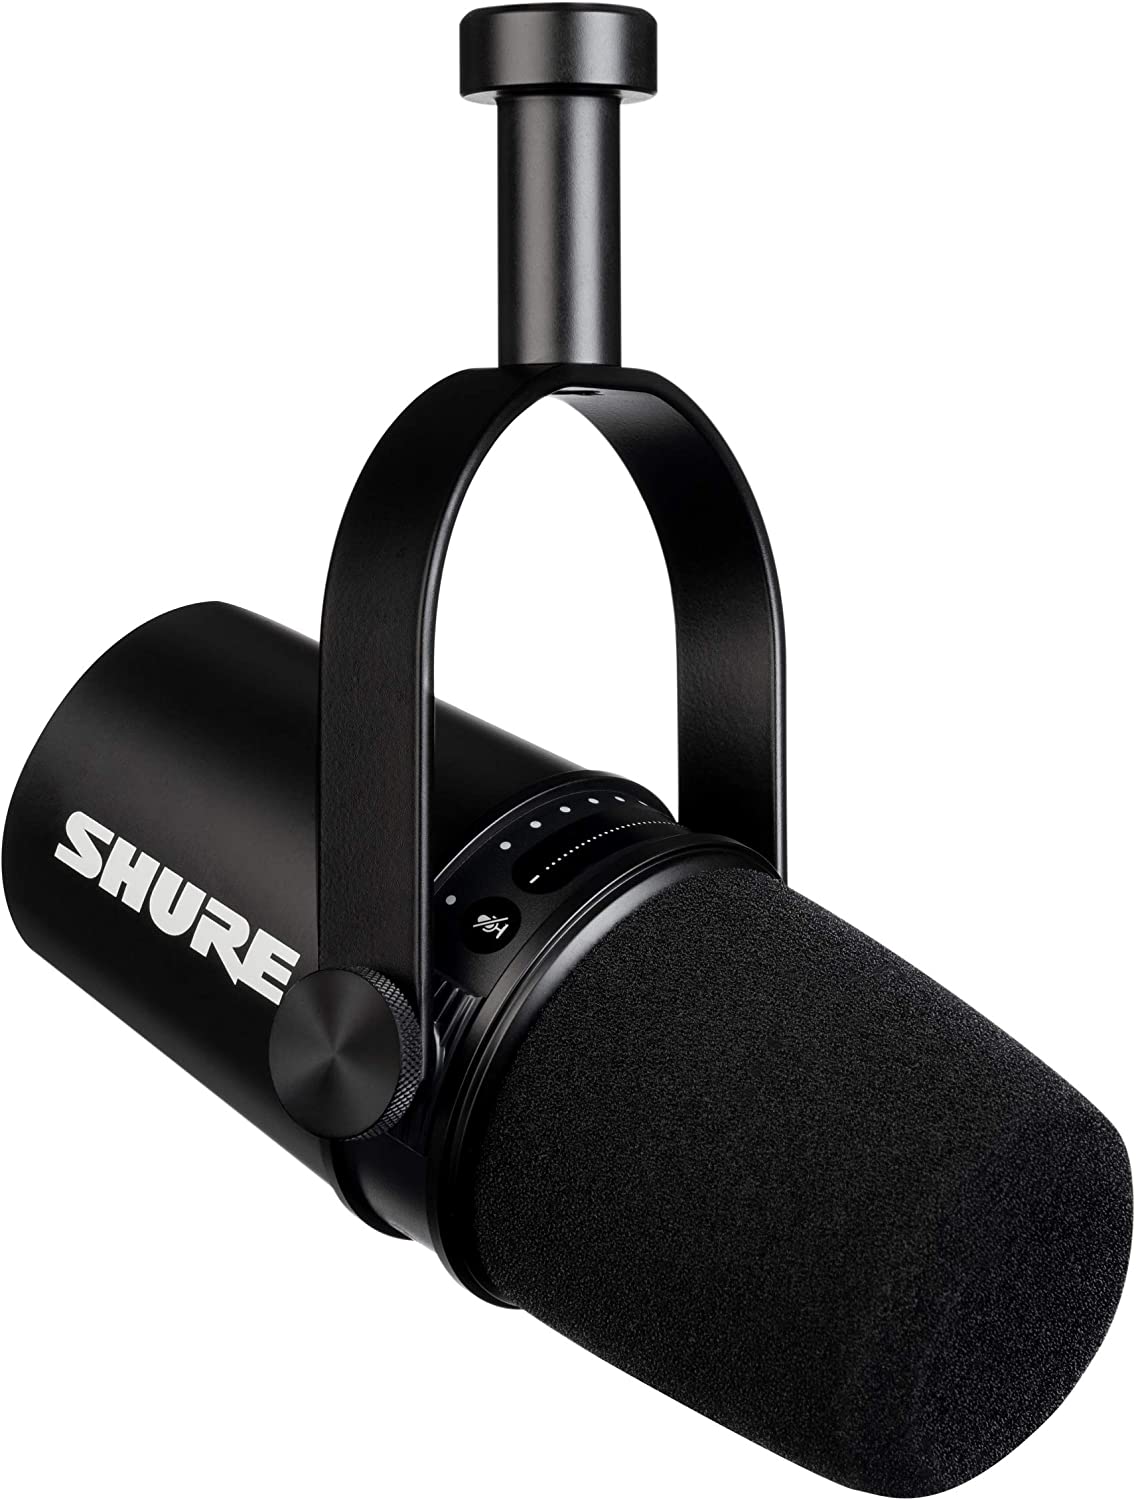 Shure MV7 USB/XLR dynamic podcast microphone